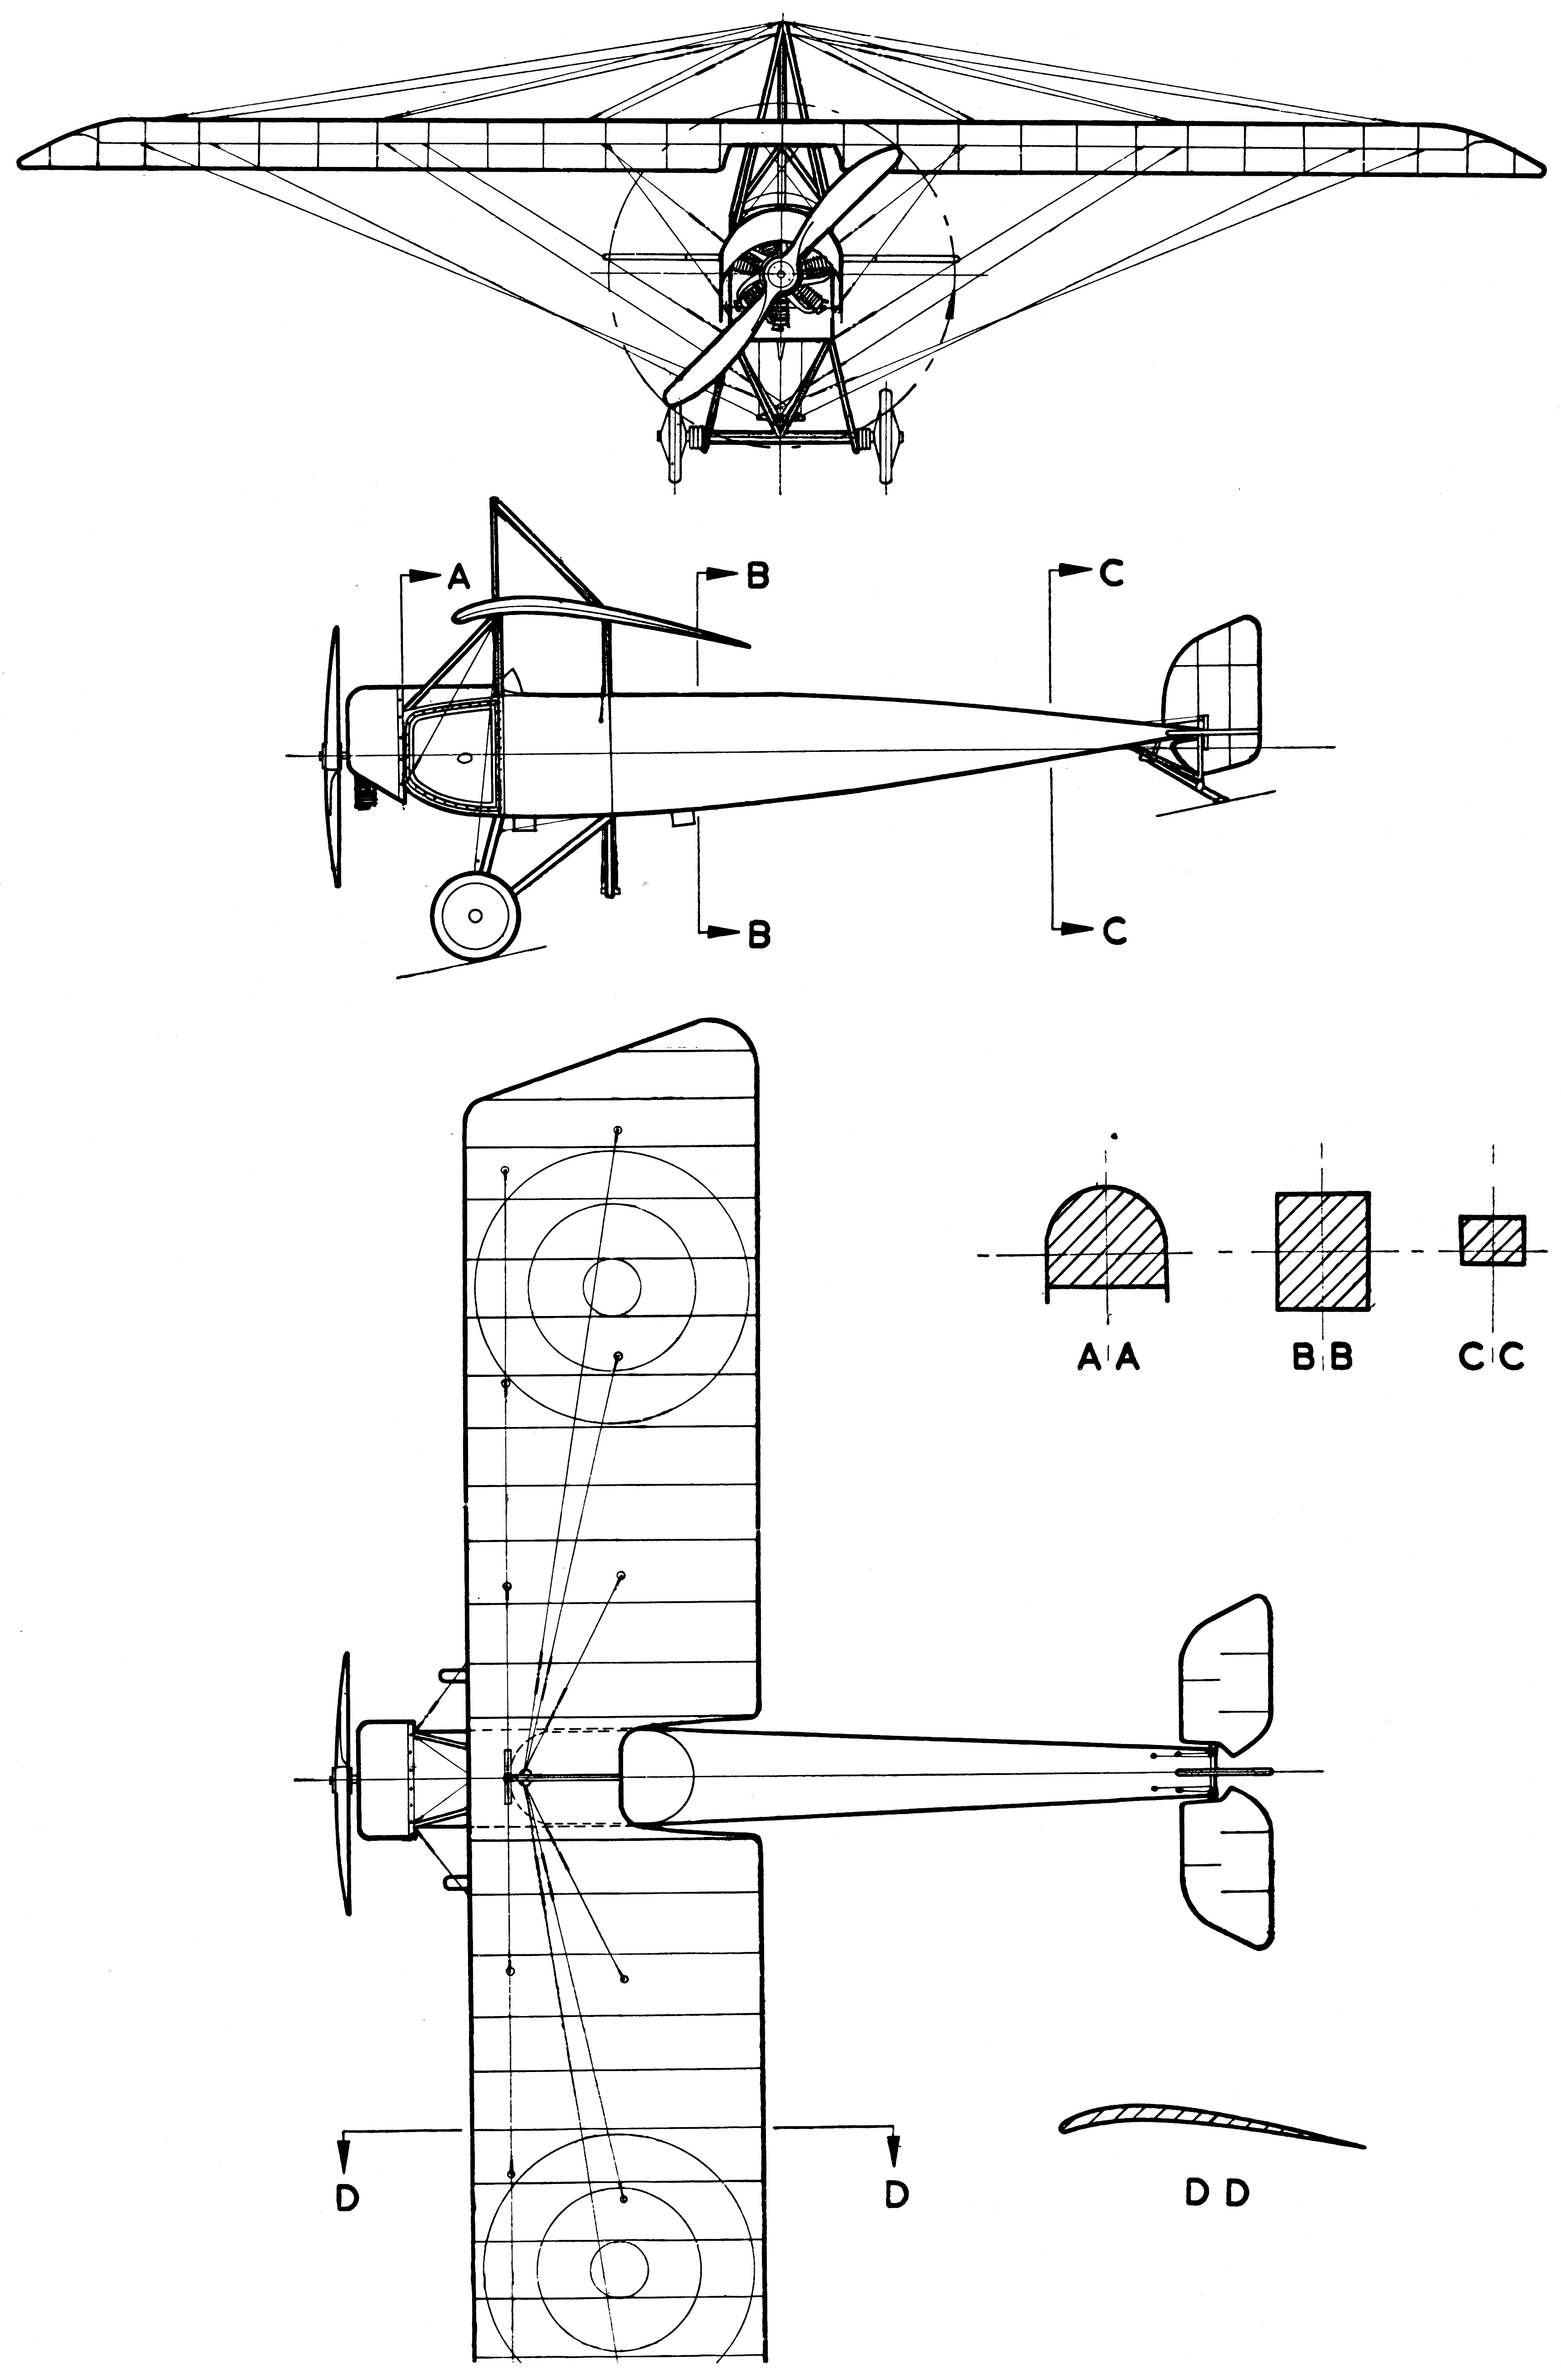 Morane-Saulnier L blueprint